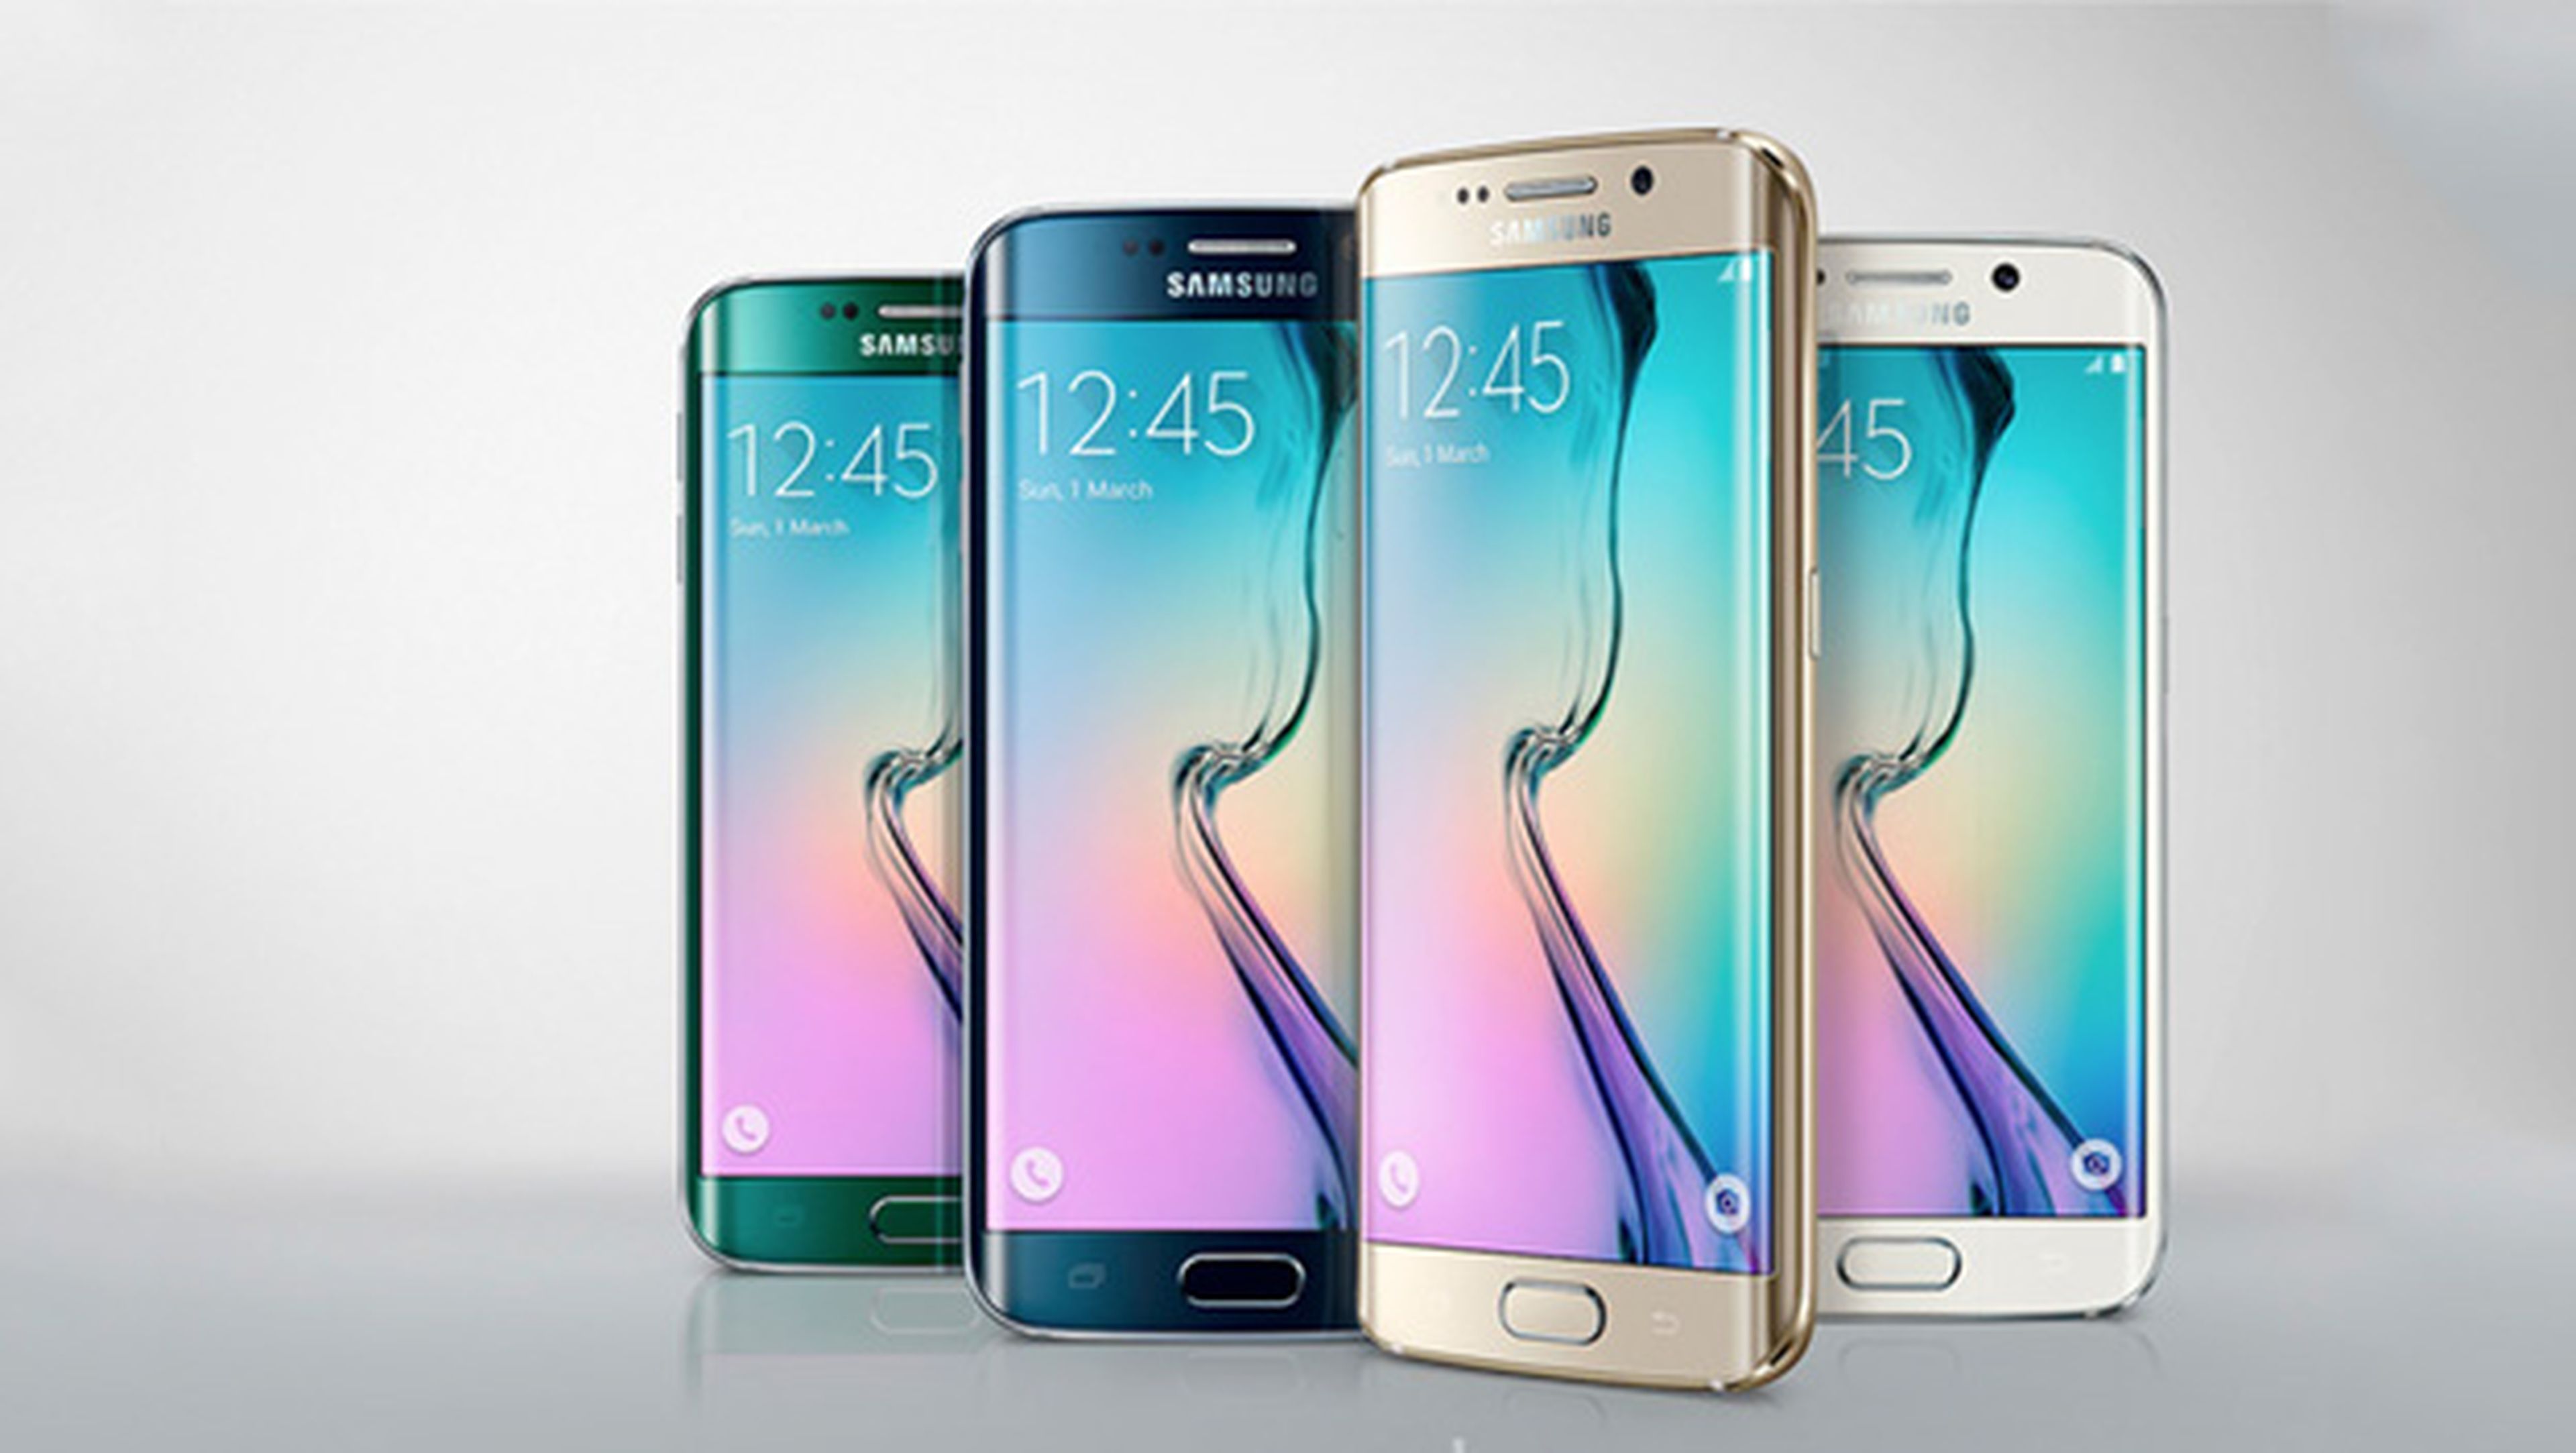 Самсунг телефон новинка цены. Samsung s6. Samsung g925f Galaxy s6 Edge. Samsung Galaxy (SM-g925) s6 Edge. Samsung s6 2016.